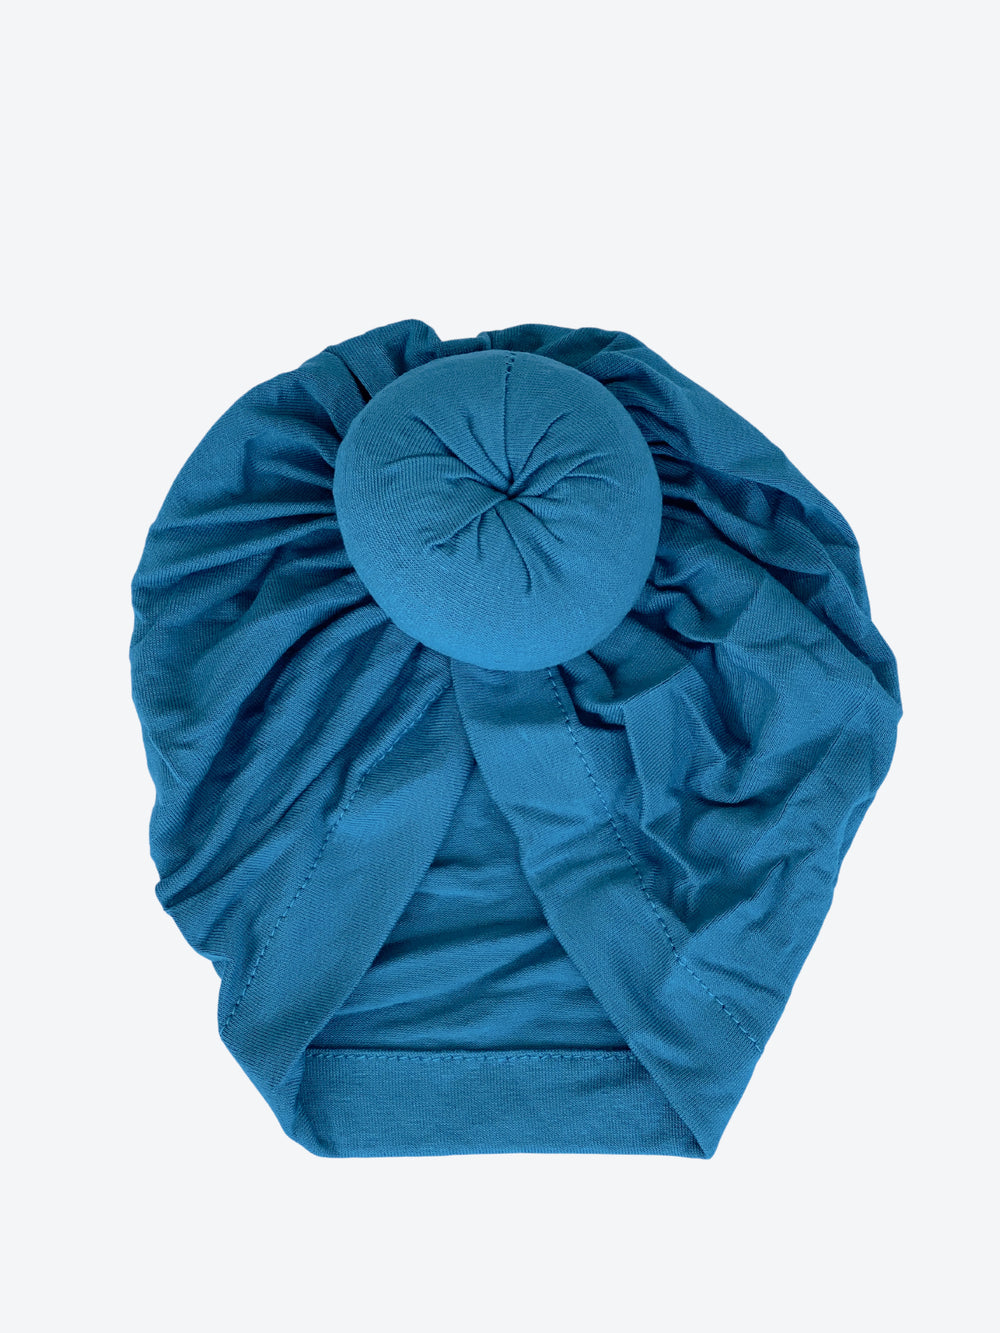 Nenina & Co turbante azul